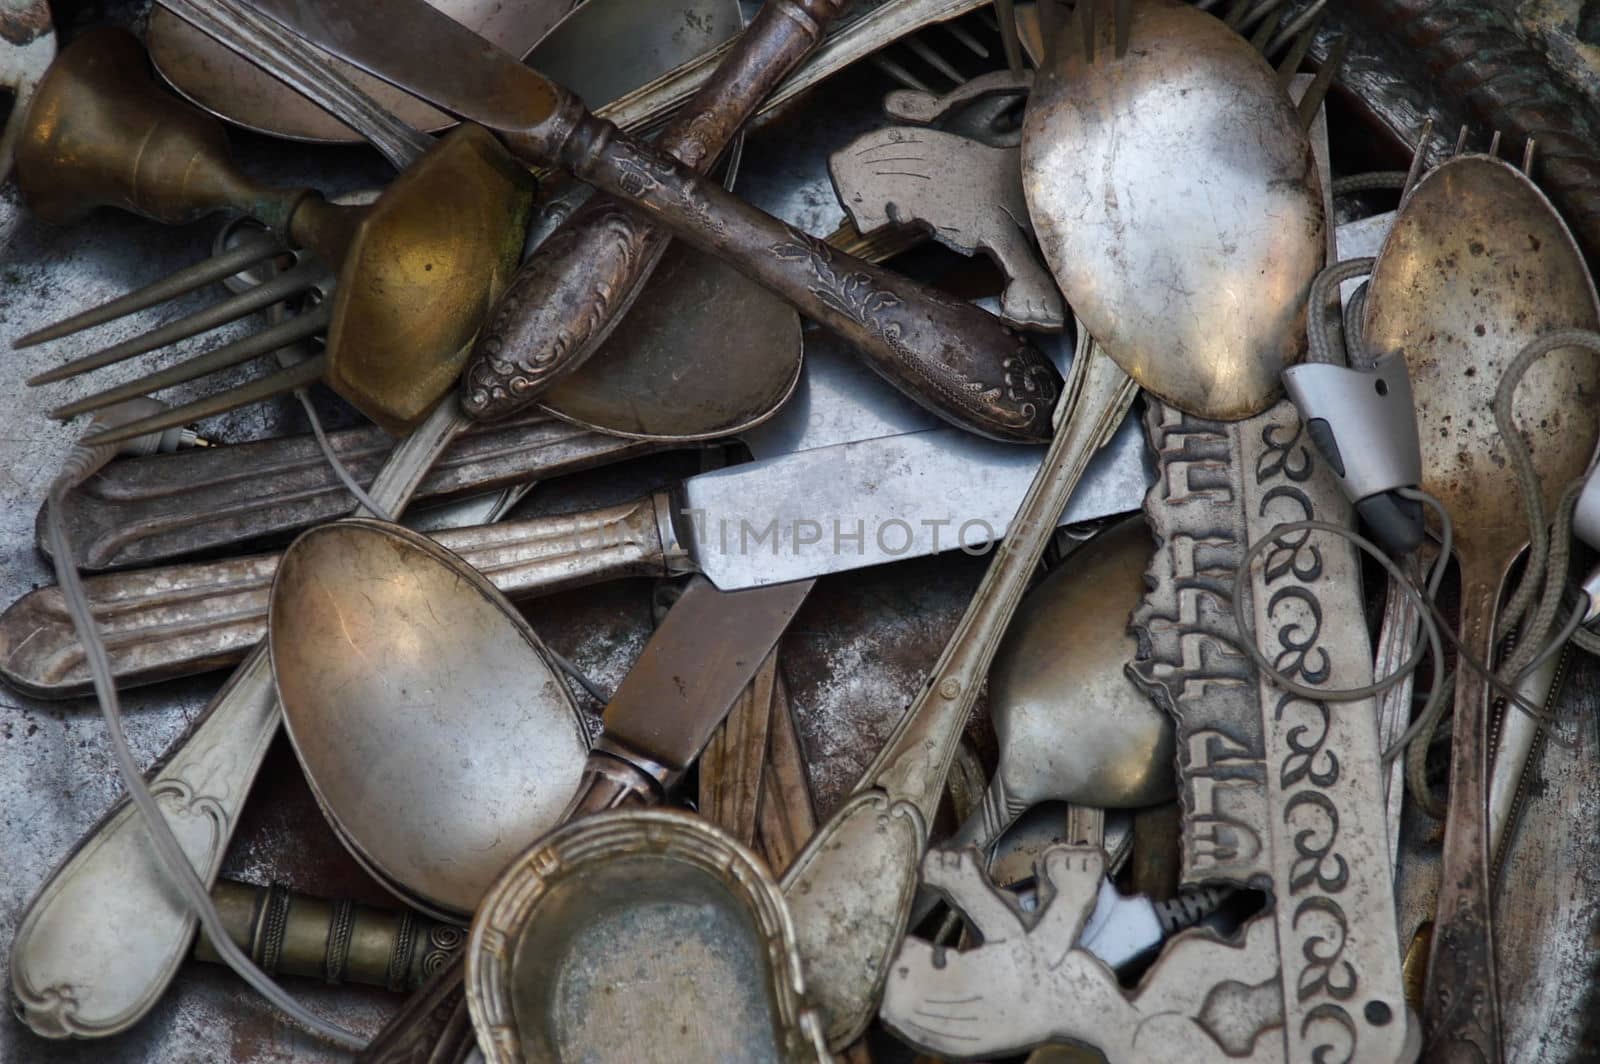 Old spoons, forks, knifes from the east market in jerusalem